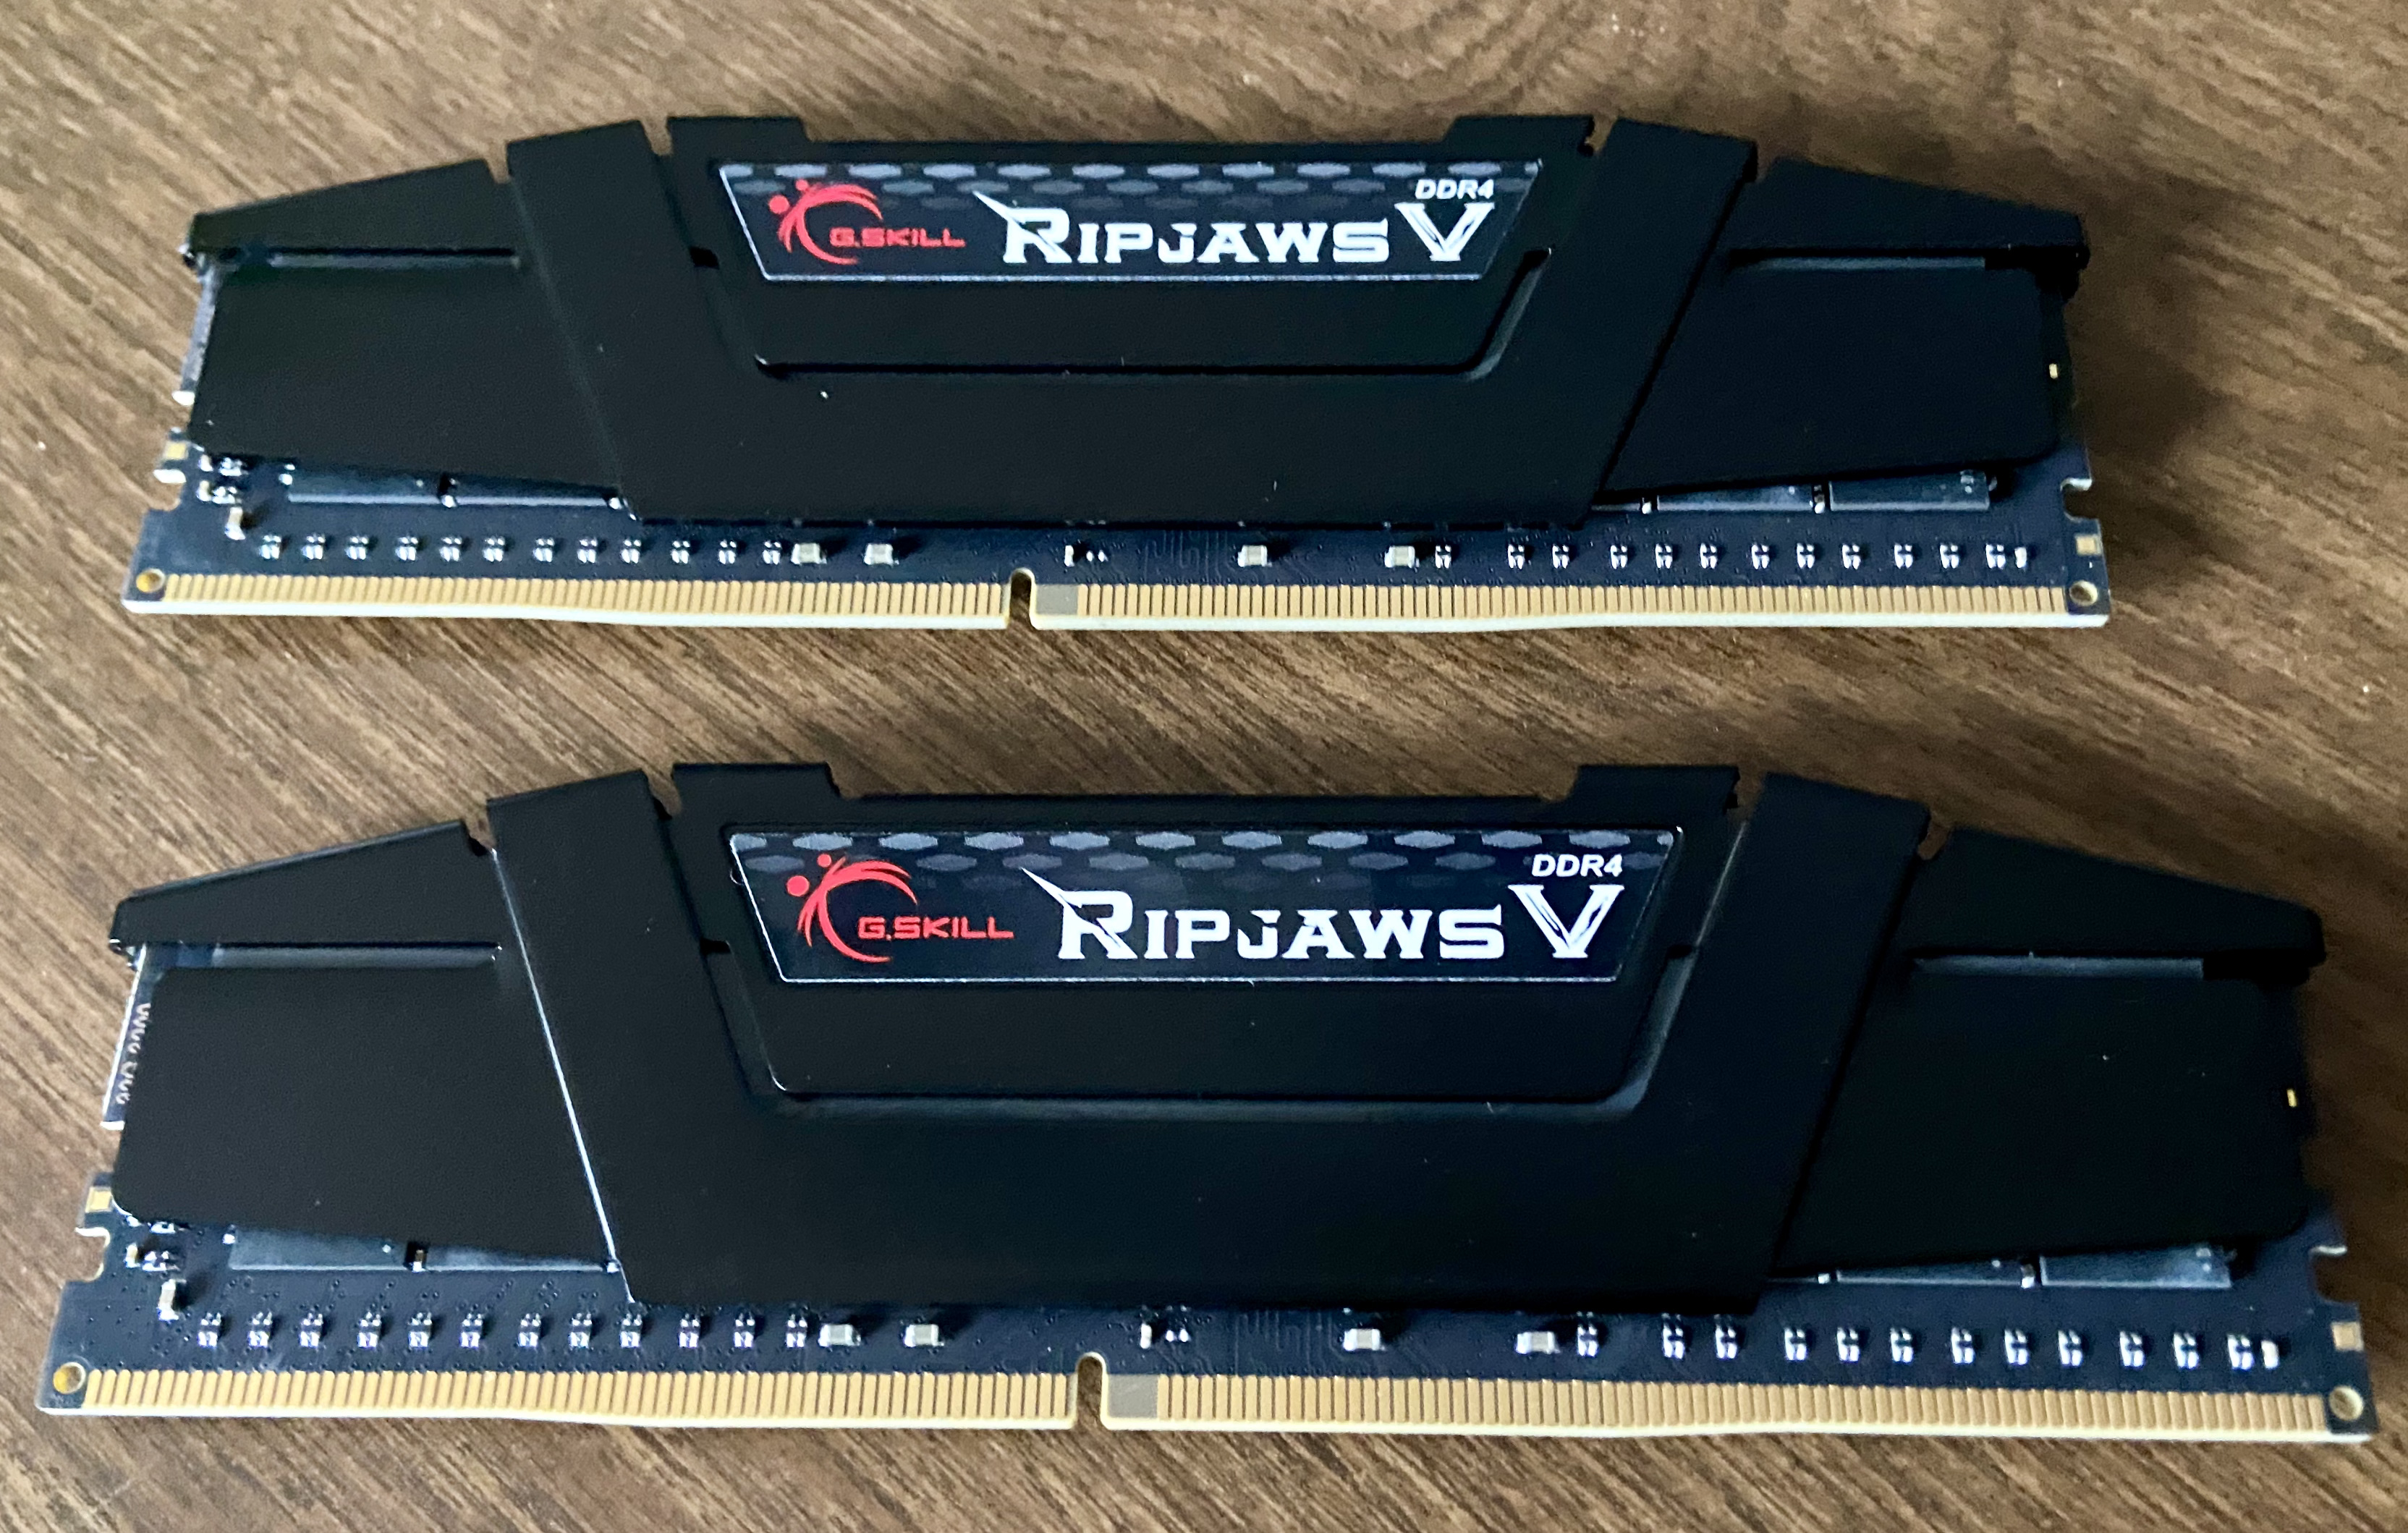 Two 32GB sticks of DDR4 3200 ram in